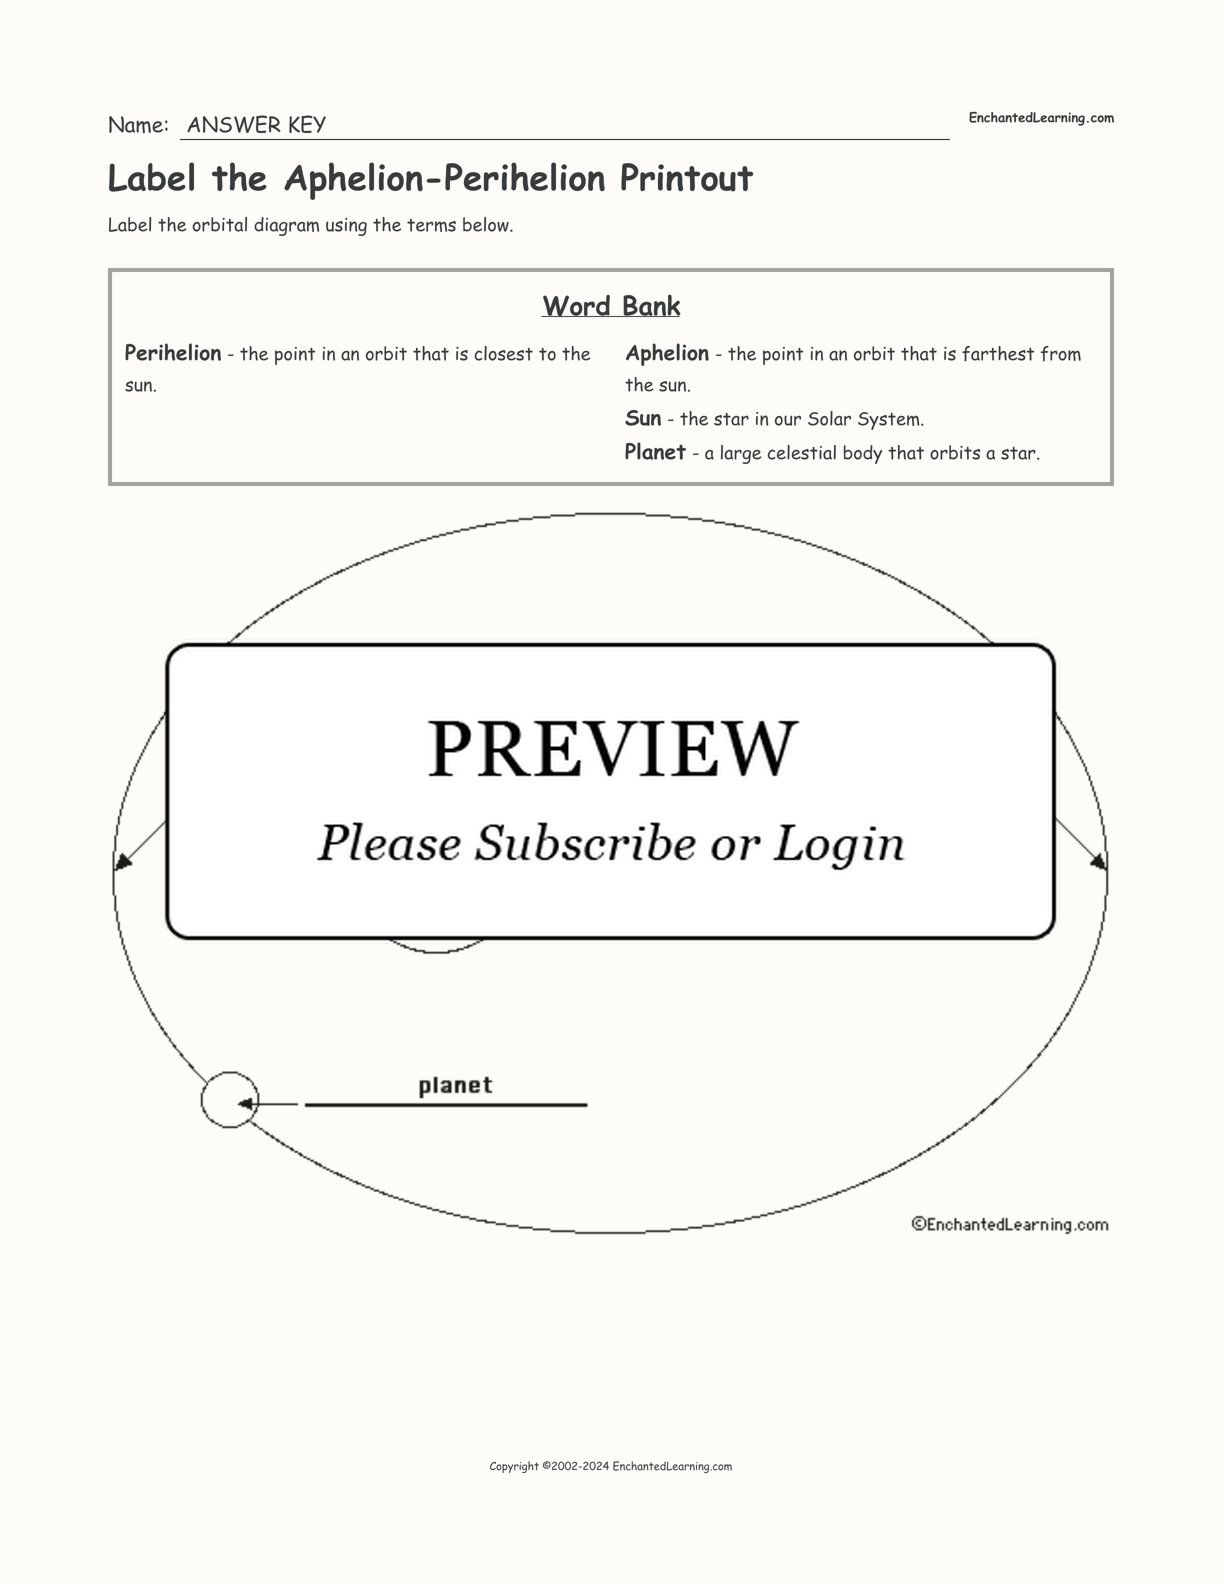 Label the Aphelion-Perihelion Printout interactive worksheet page 2